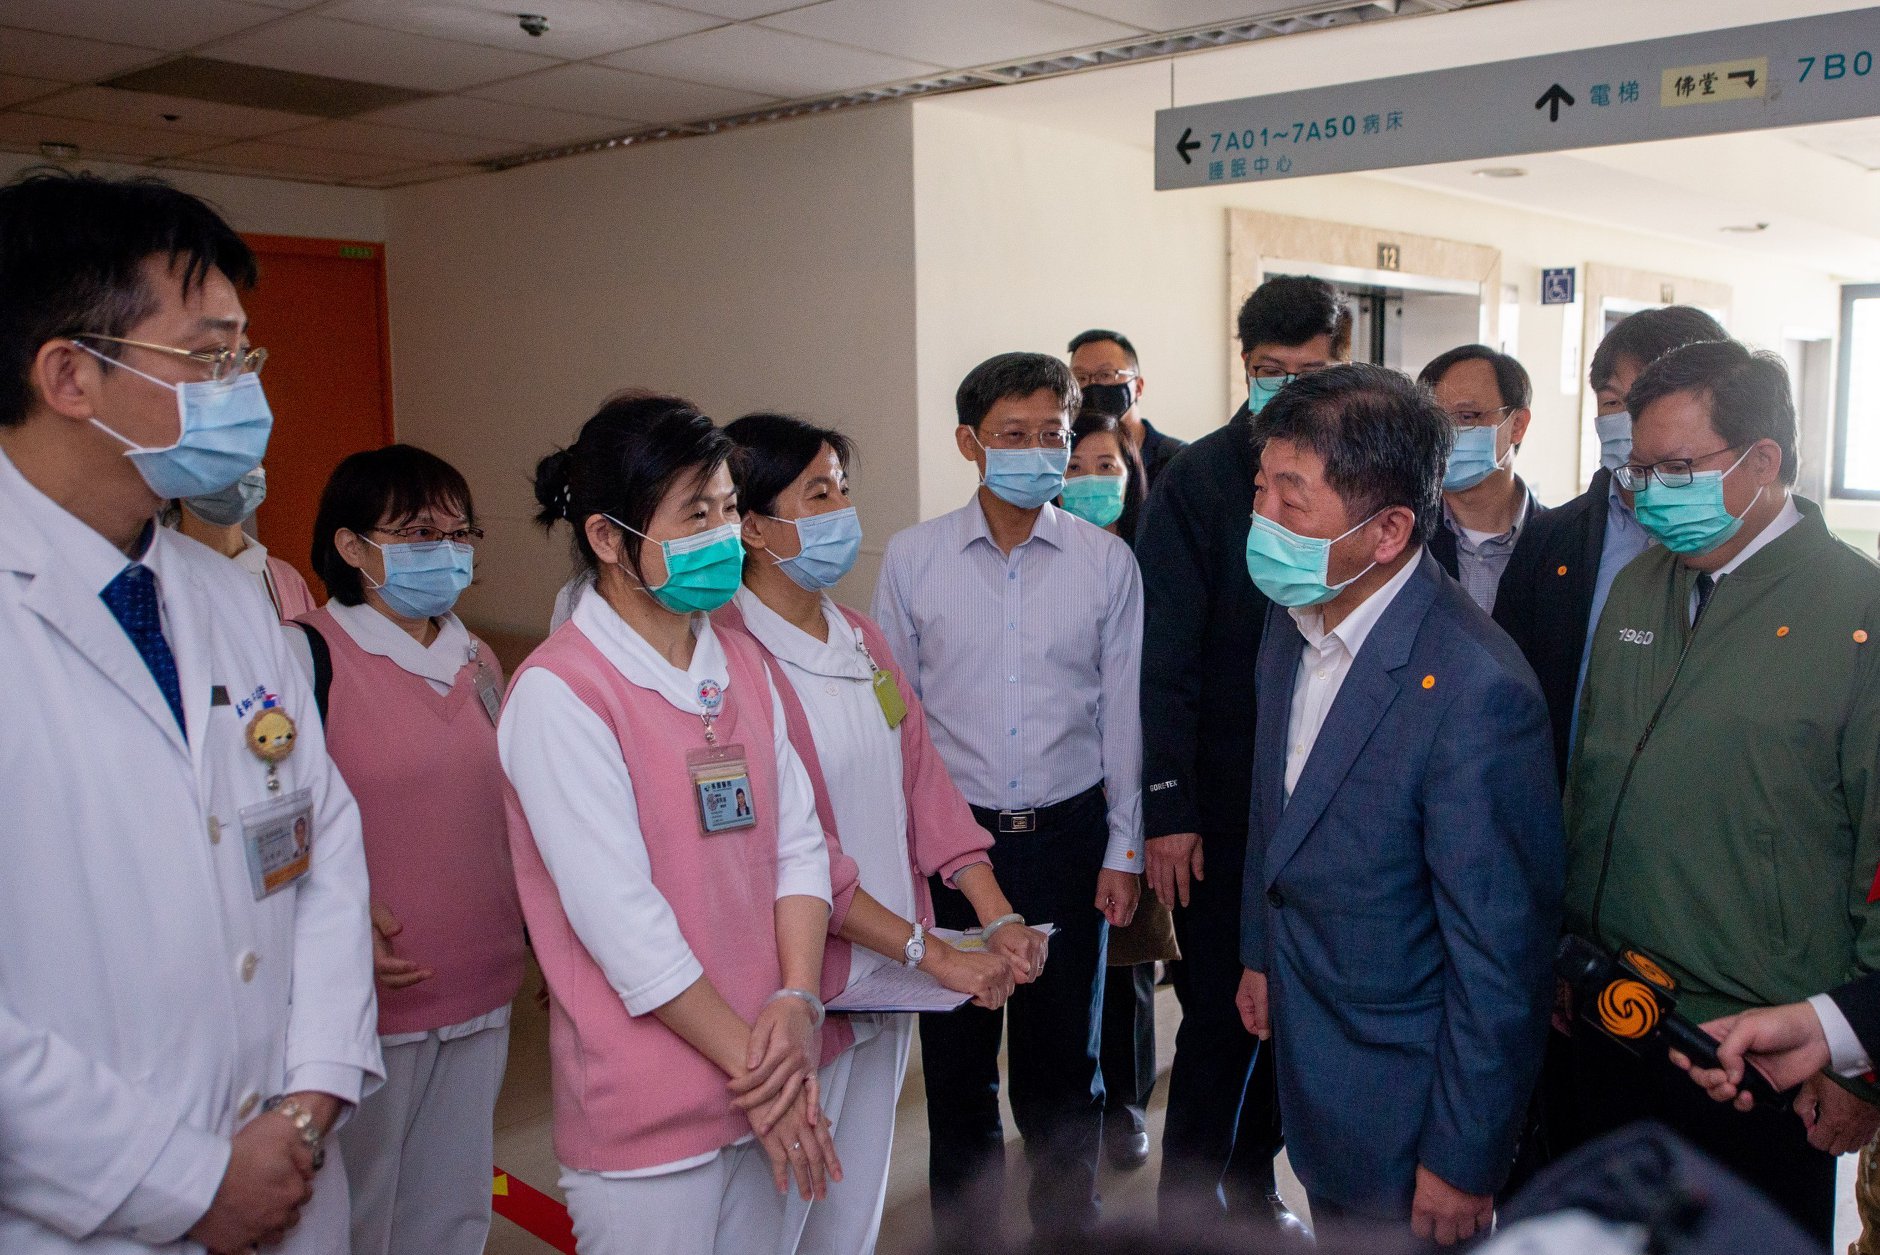 Commander Chen Shih-Chung visiting hospital staffs at Tao Yuan General Hospital, Ministry of Health and Welfare. Photo Credit: Taoyuan City Government